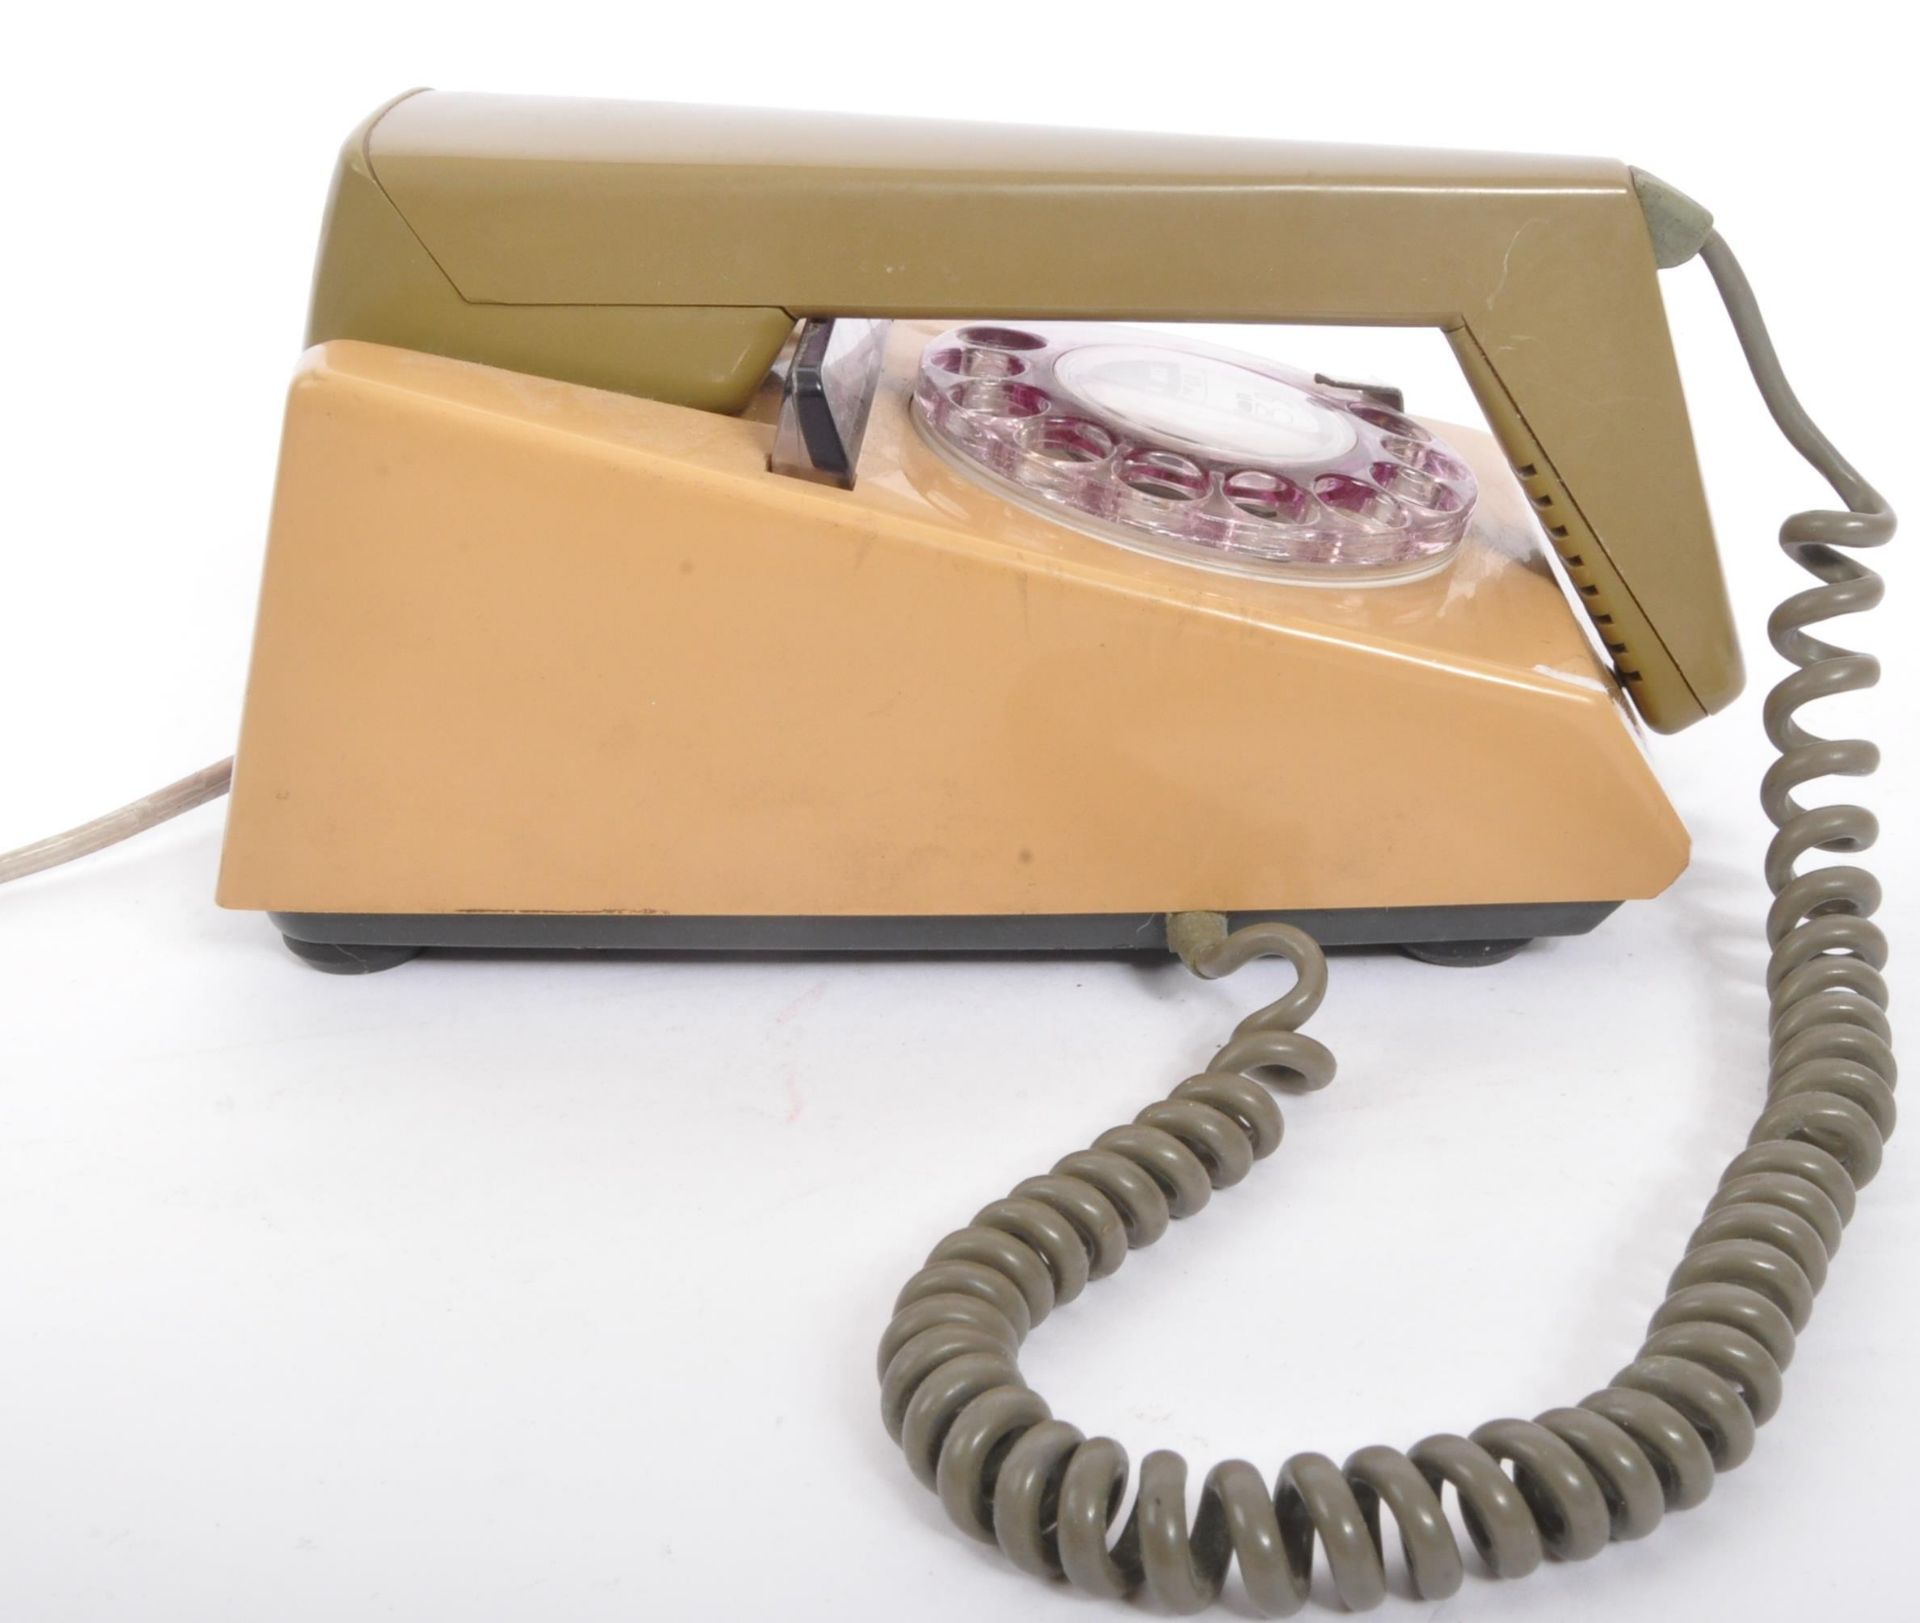 VINTAGE MID 20TH CENTURY BAKELITE DIAL TRIMPHONE TELEPHONE - Image 2 of 5